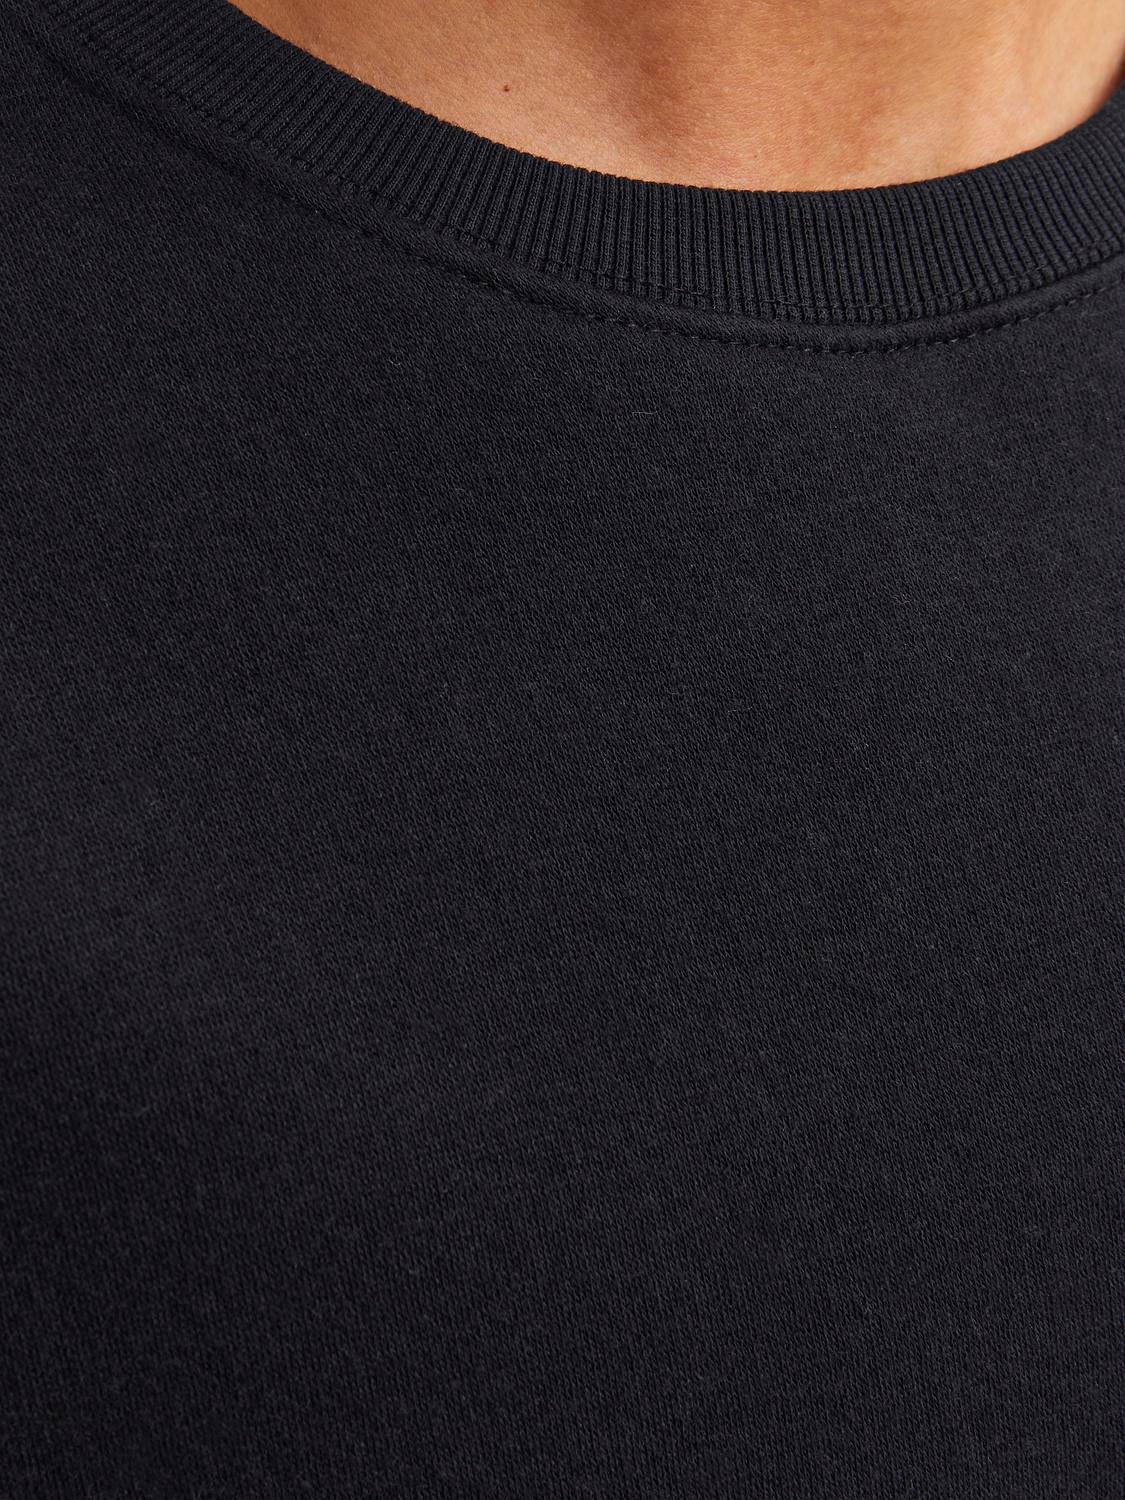 Jack & Jones Plain Crewn Neck Sweatshirt -Black - 12208182